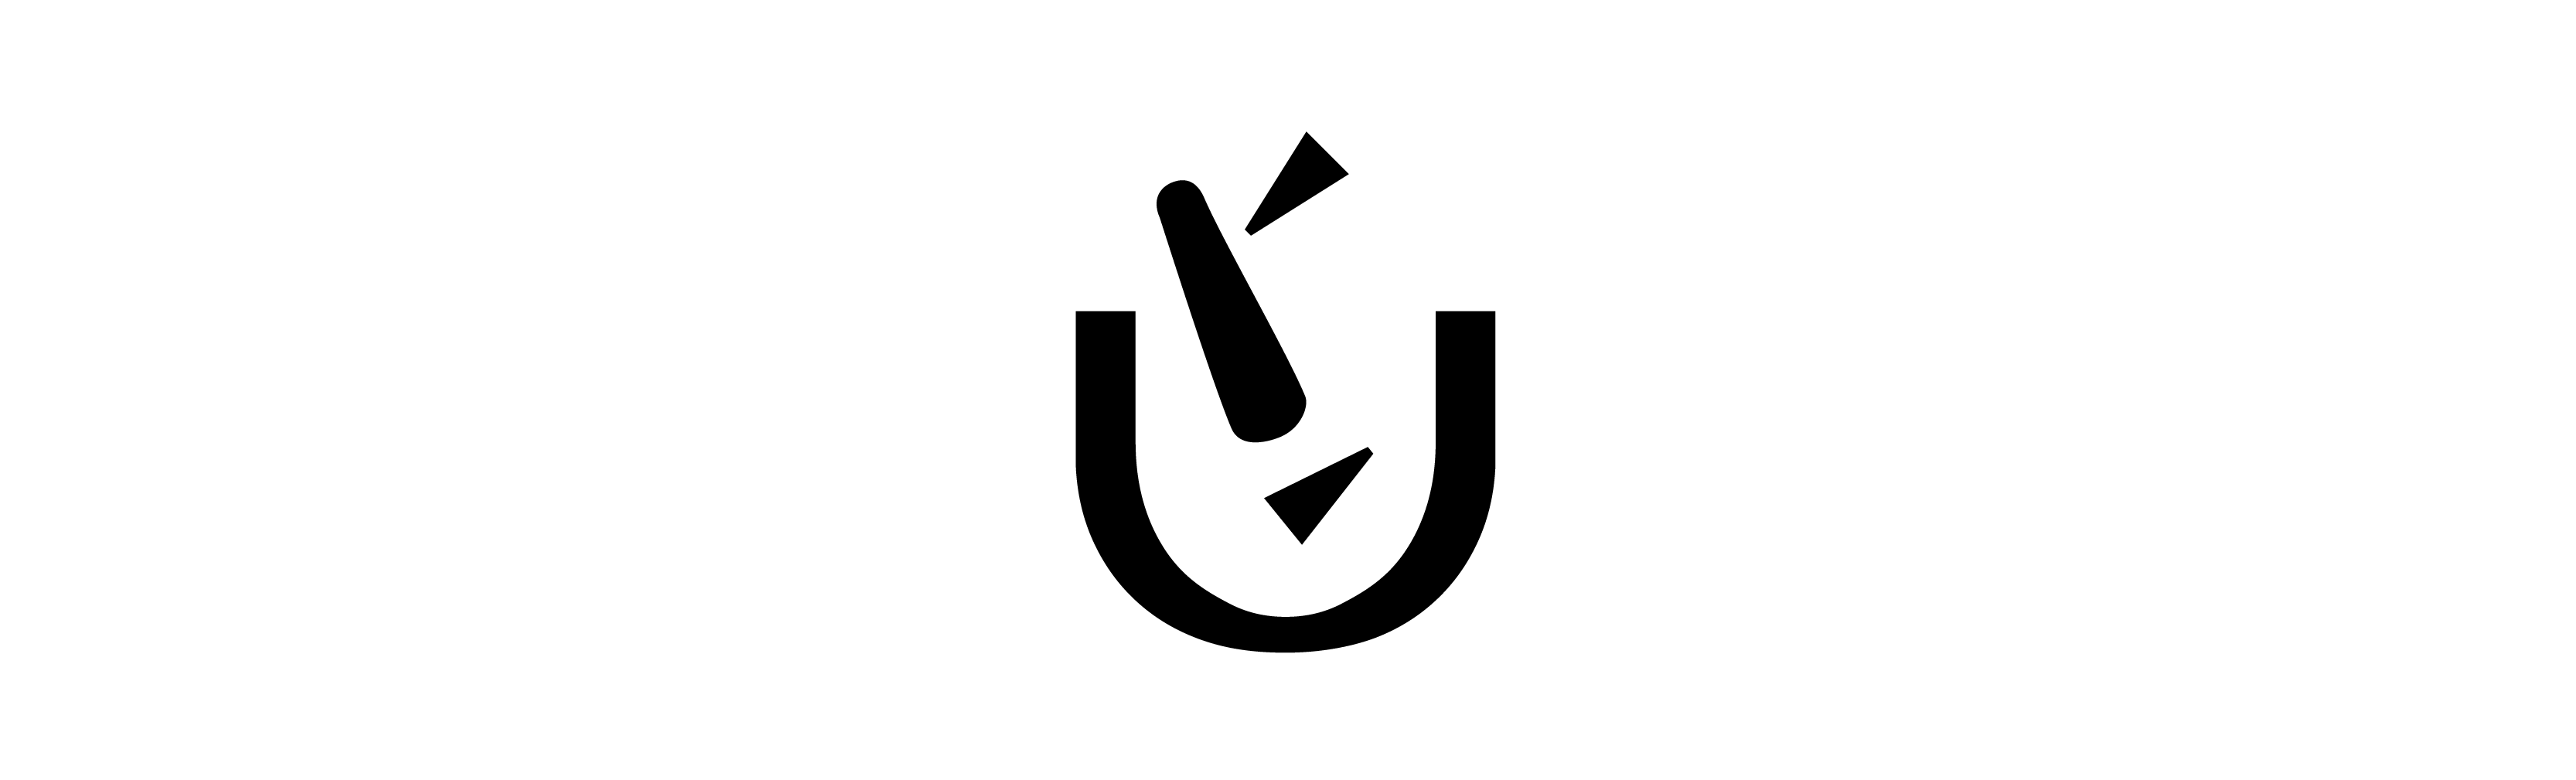 Resolu logo small wide